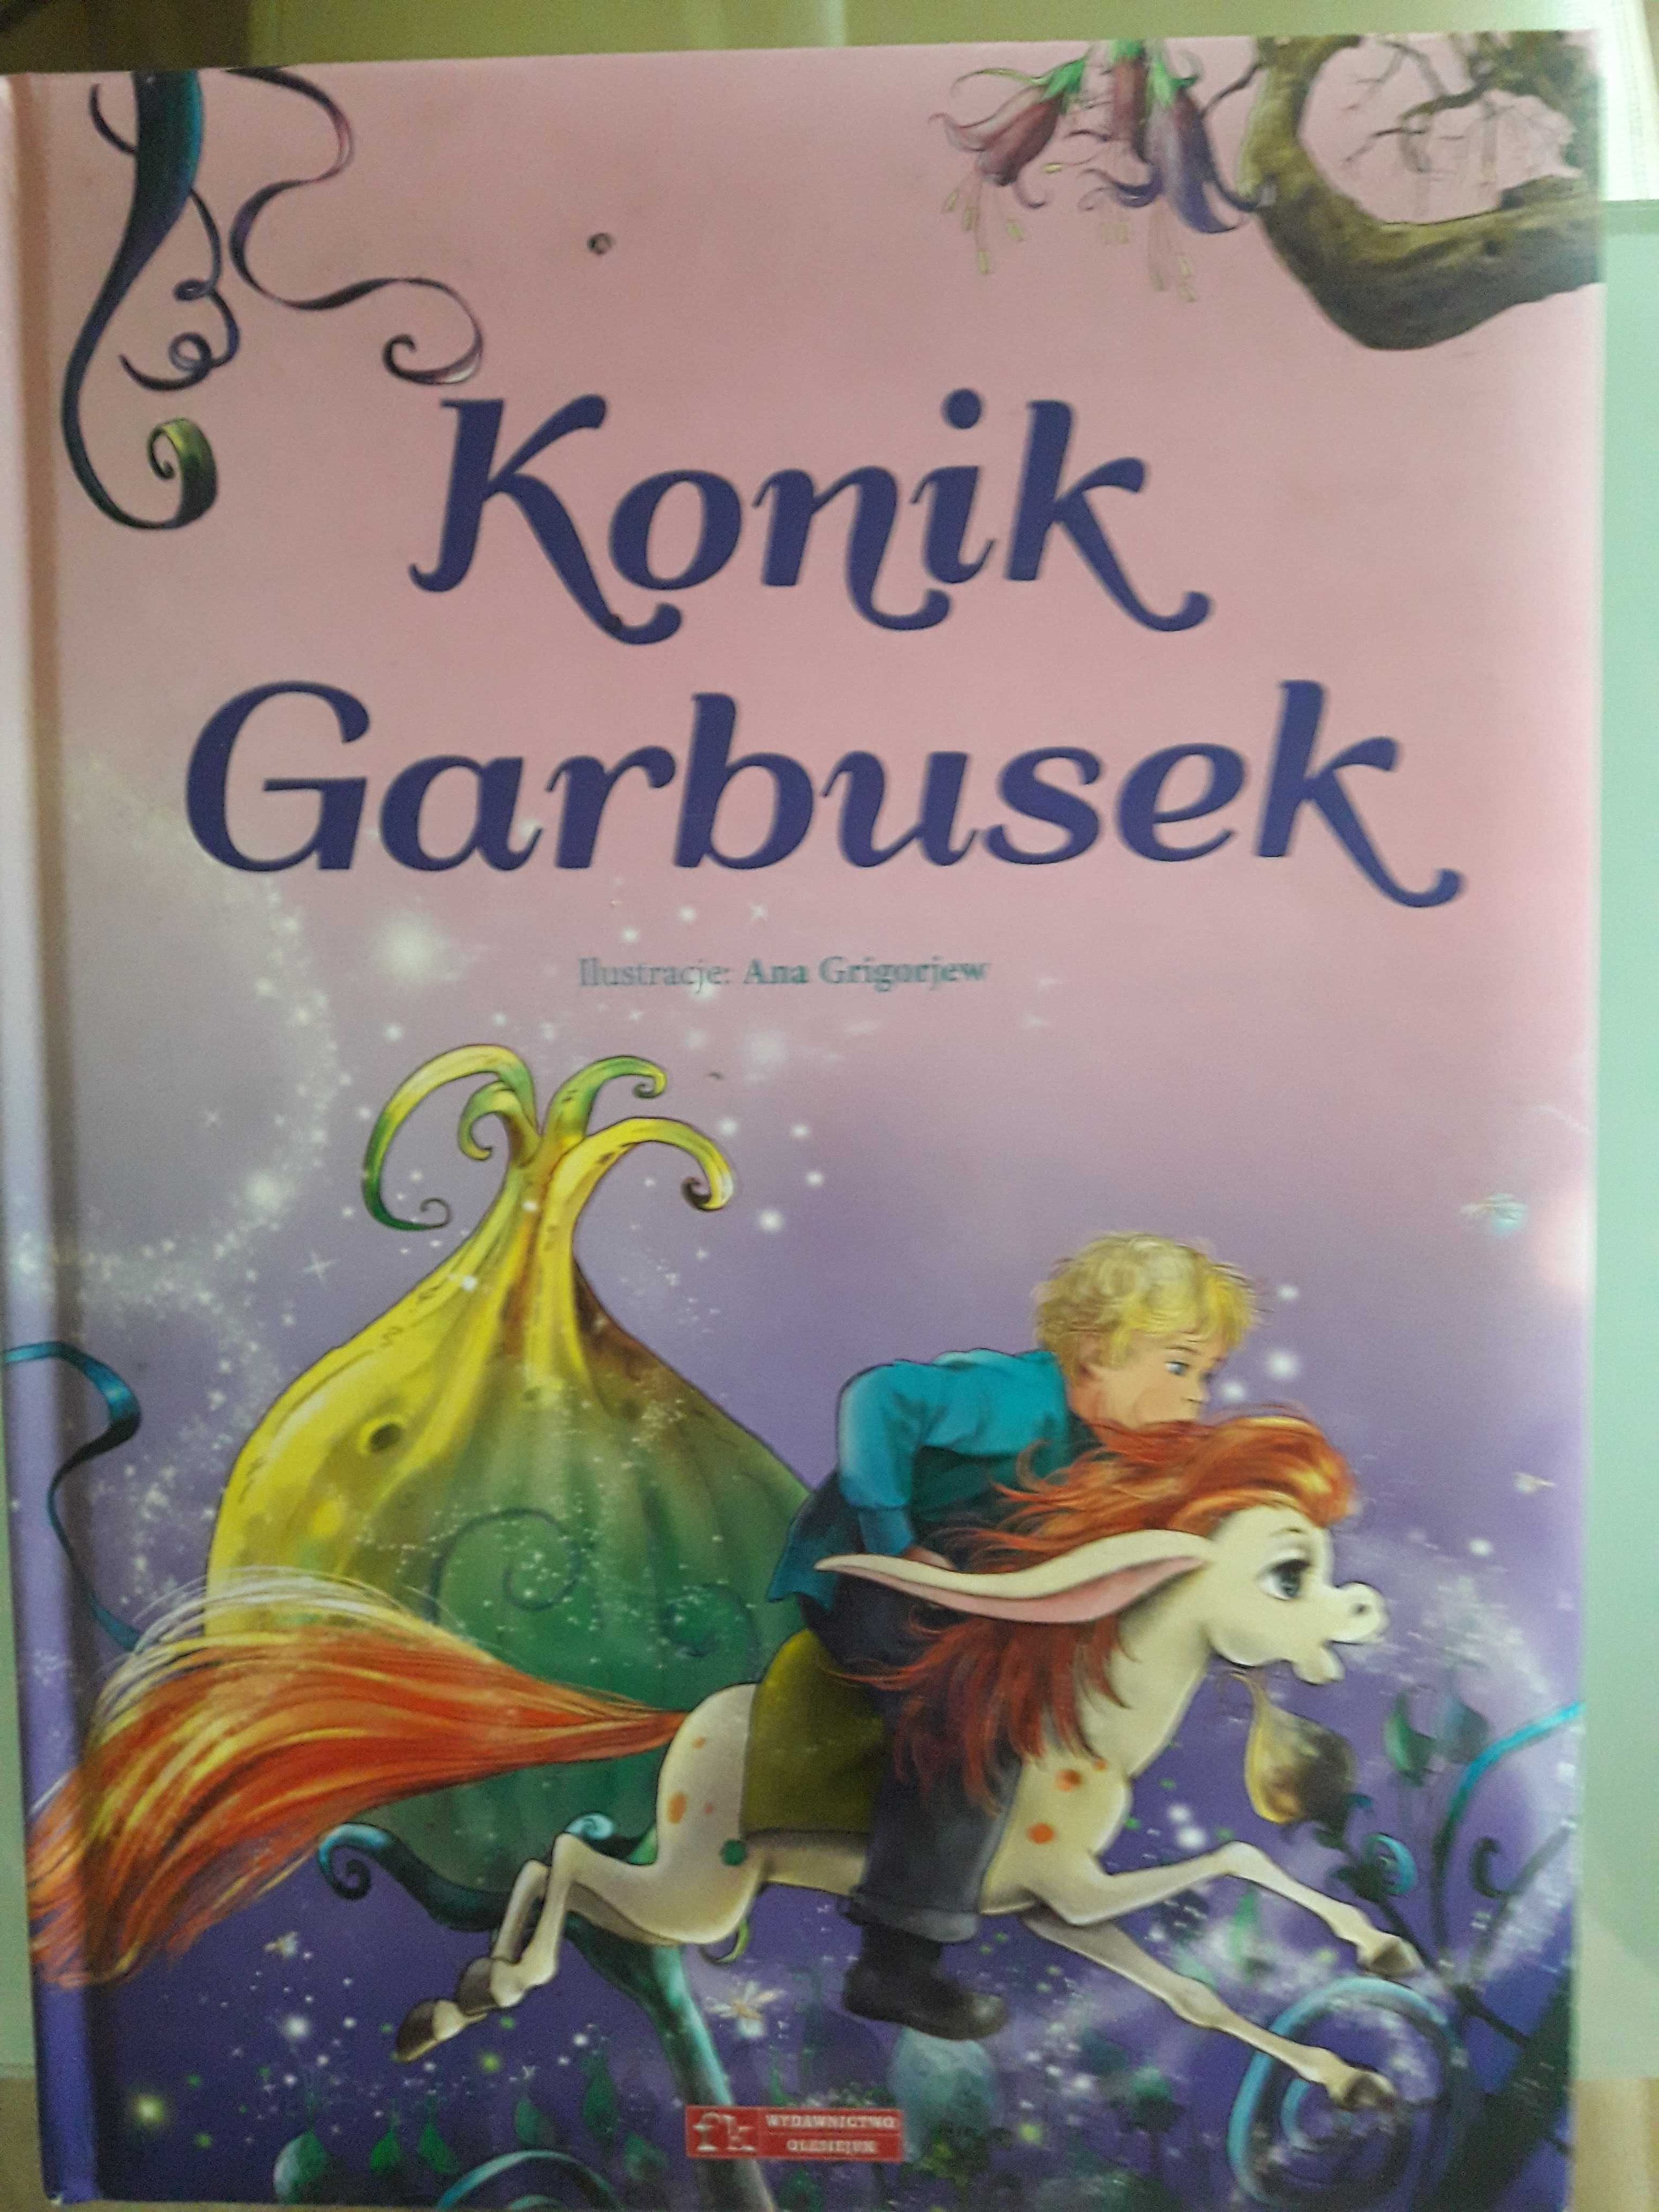 Ksiazka dla dzieci " Konik Garbusek "